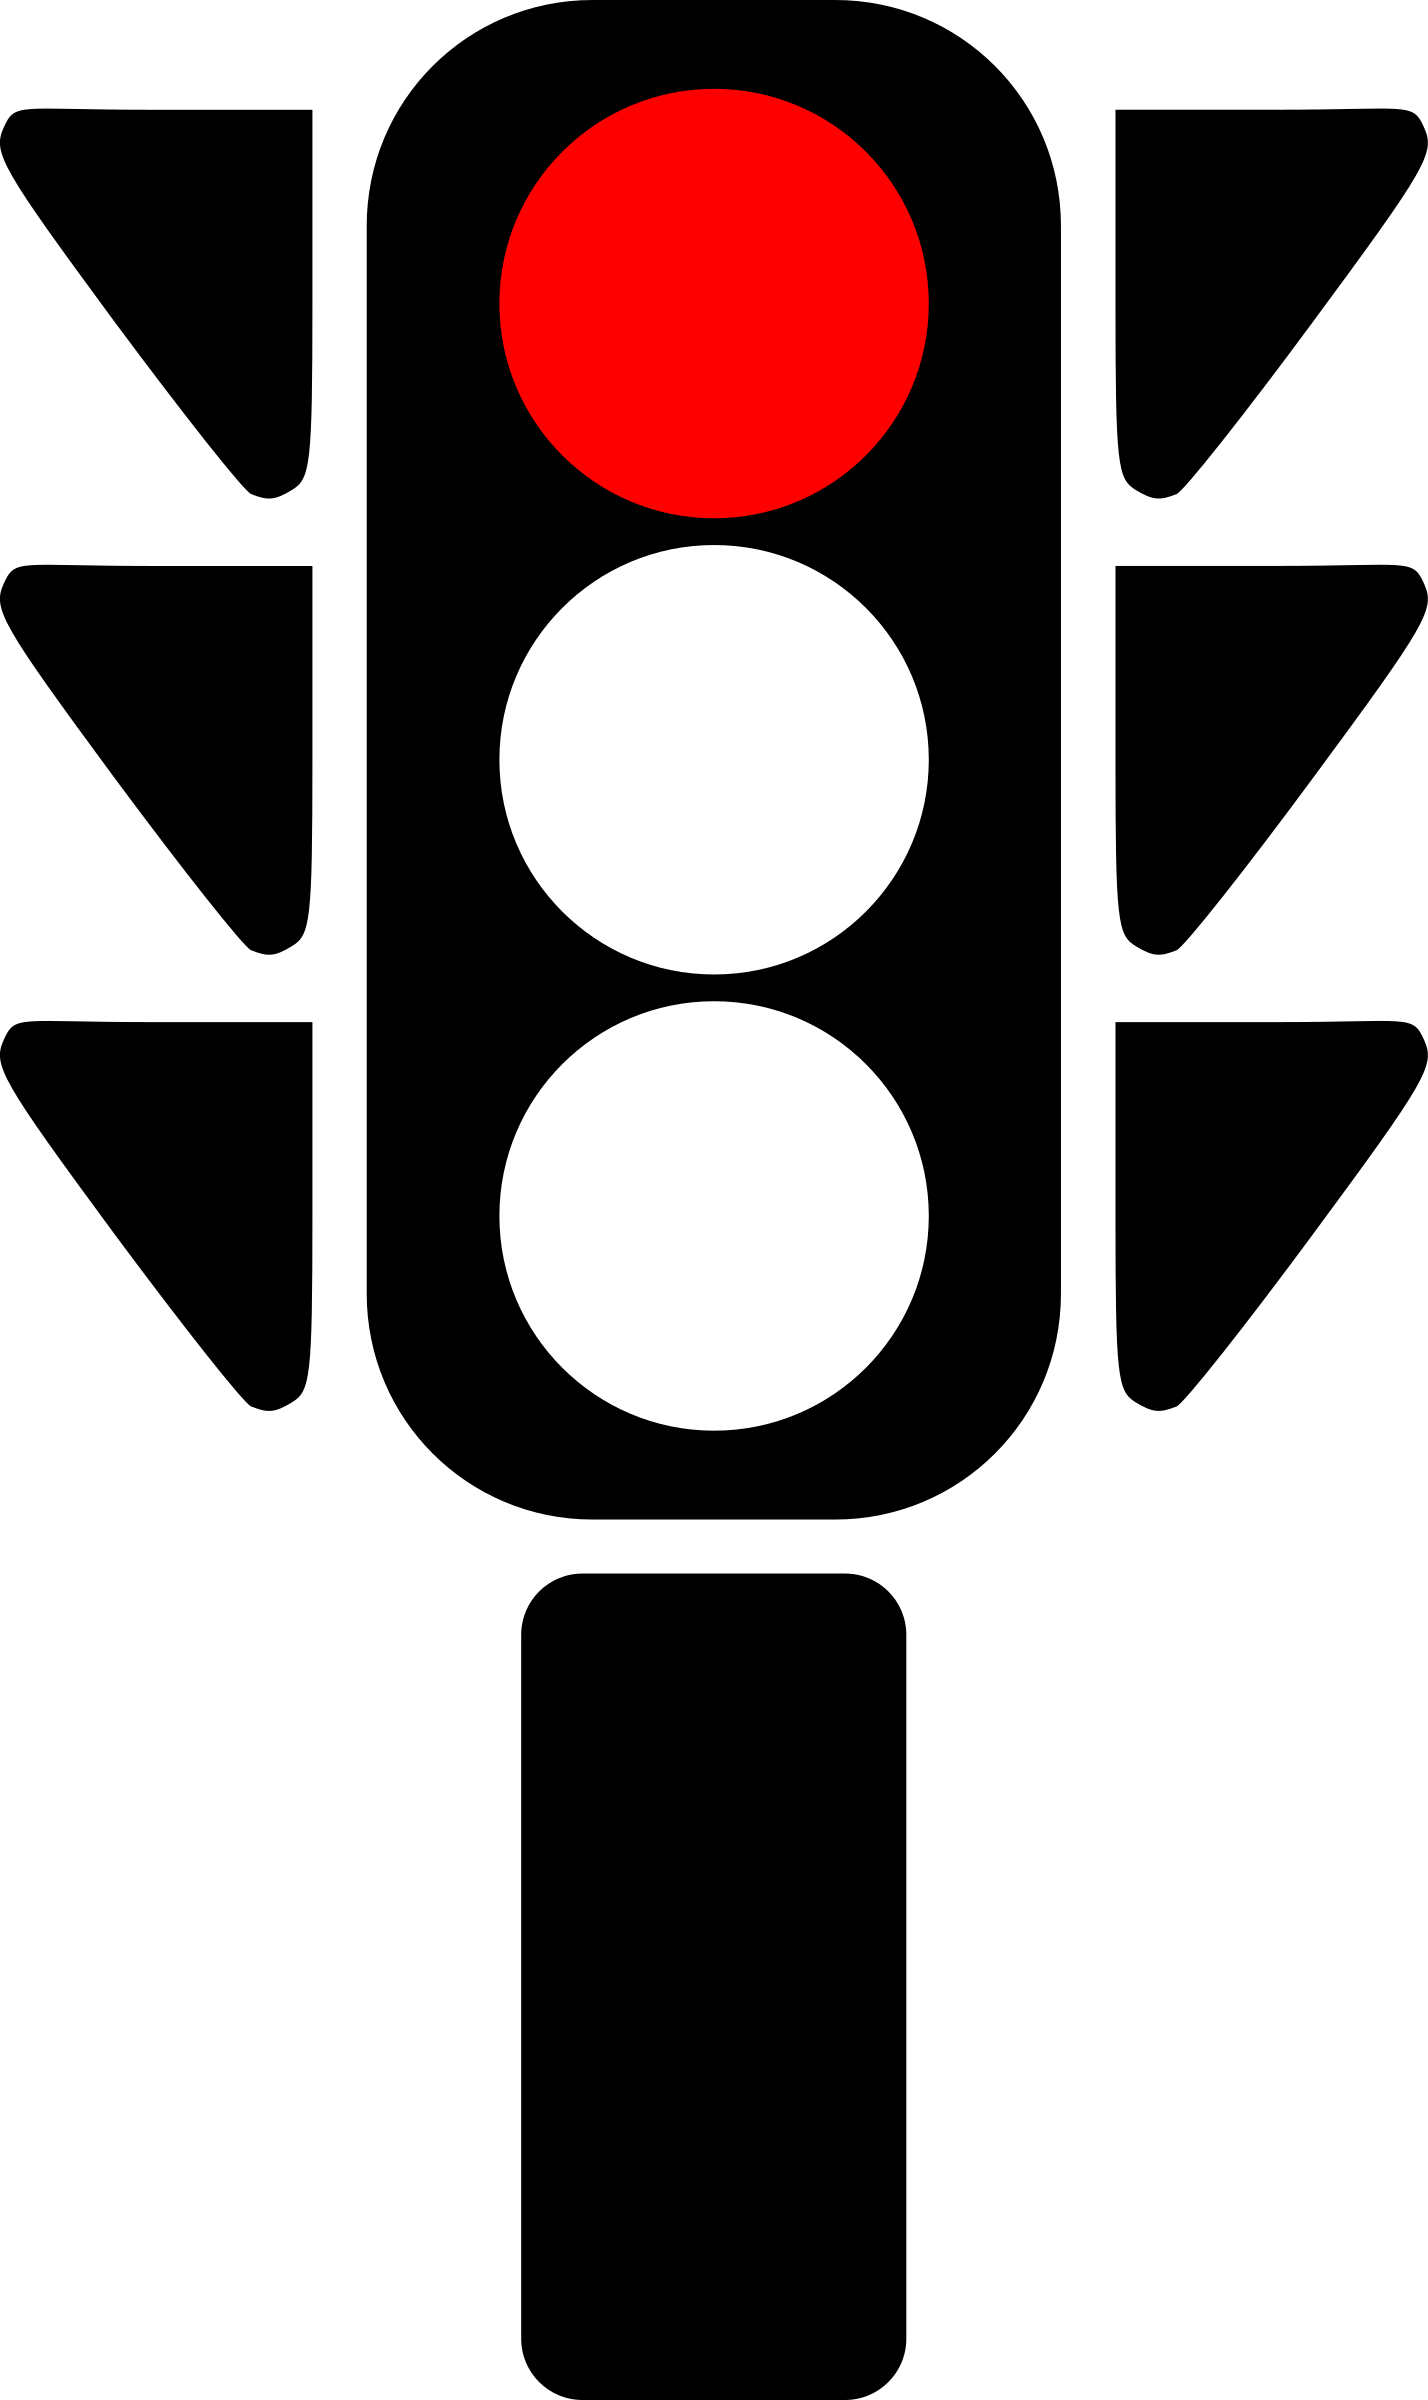 Semaphore Red Light - Red Traffic Light Icon (1428x2400)